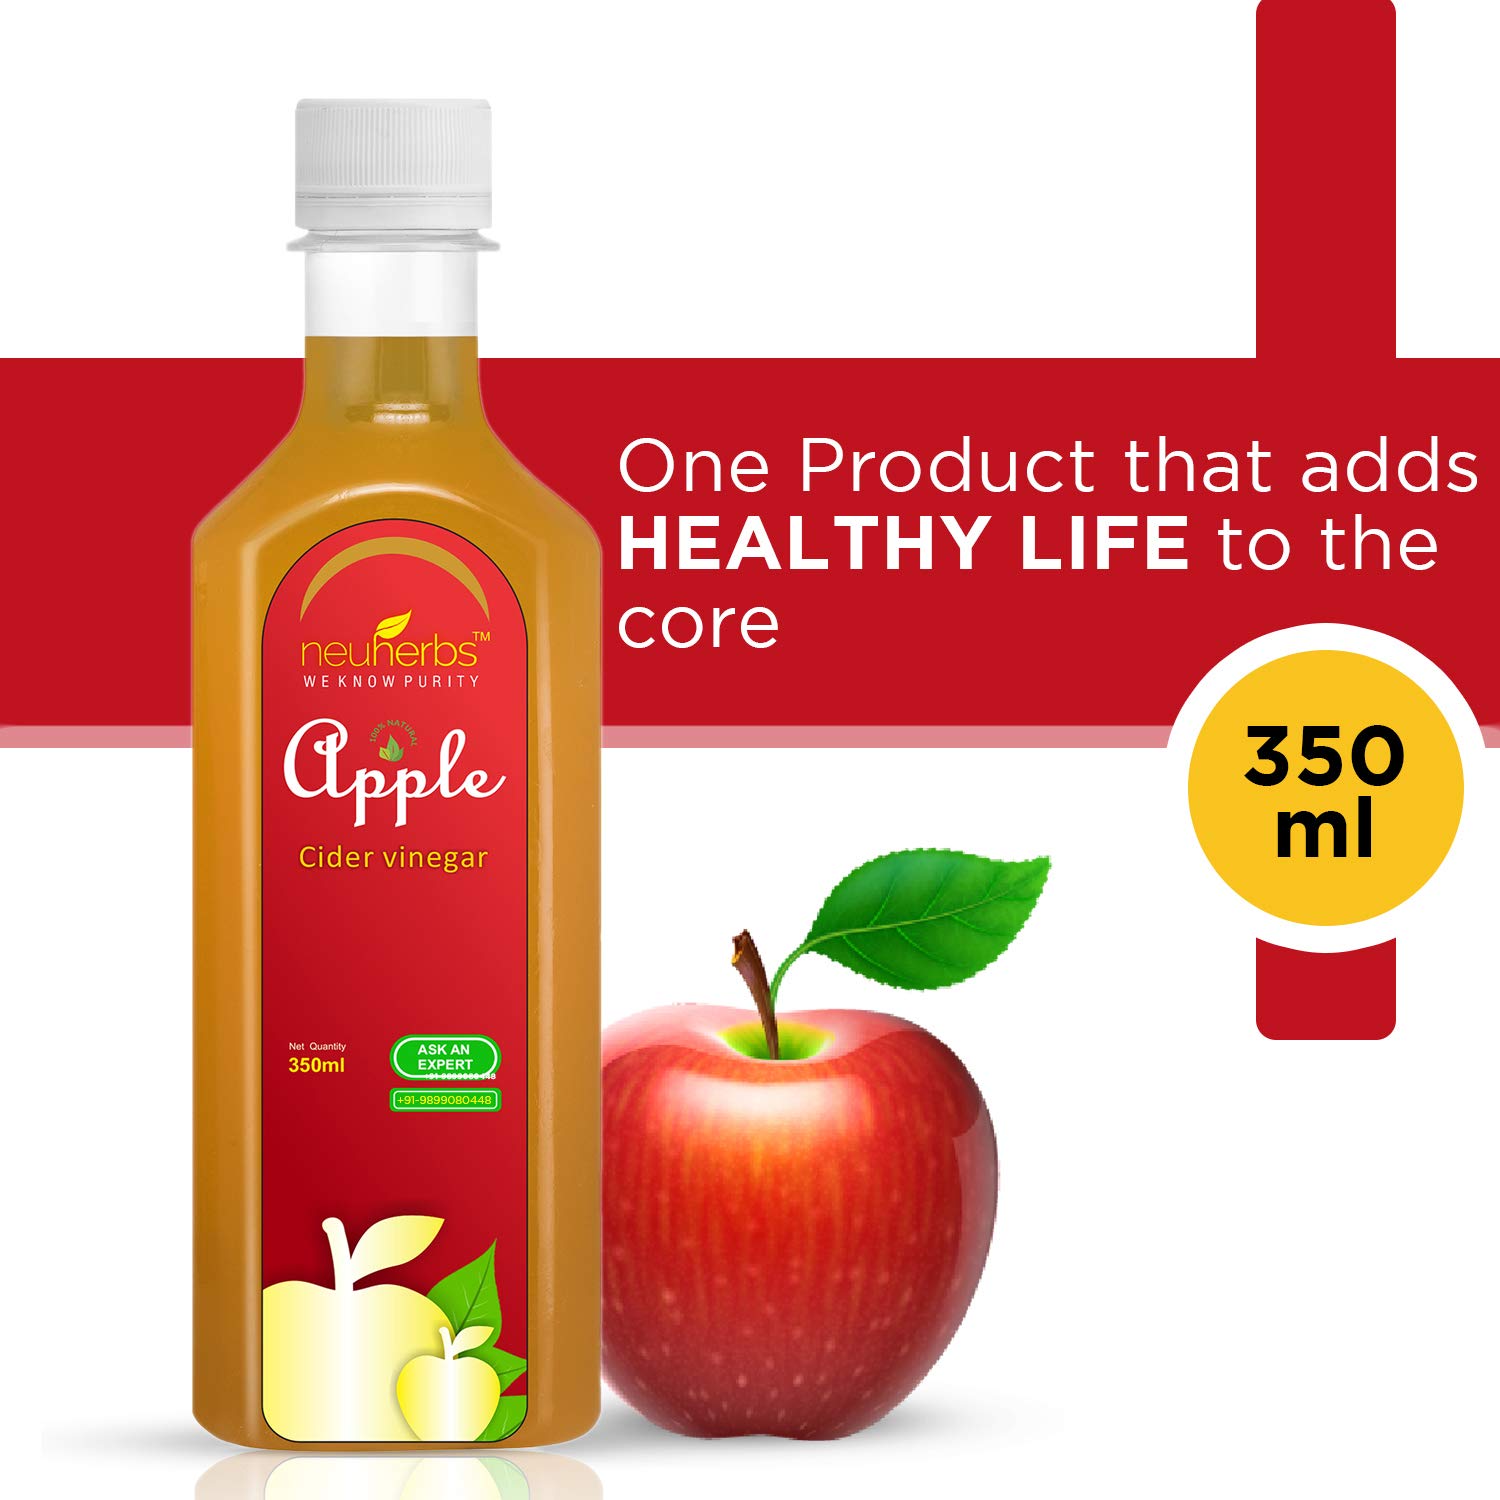 Neuherbs 100% Natural Apple Cider Vinegar for Weight Loss 350 ml